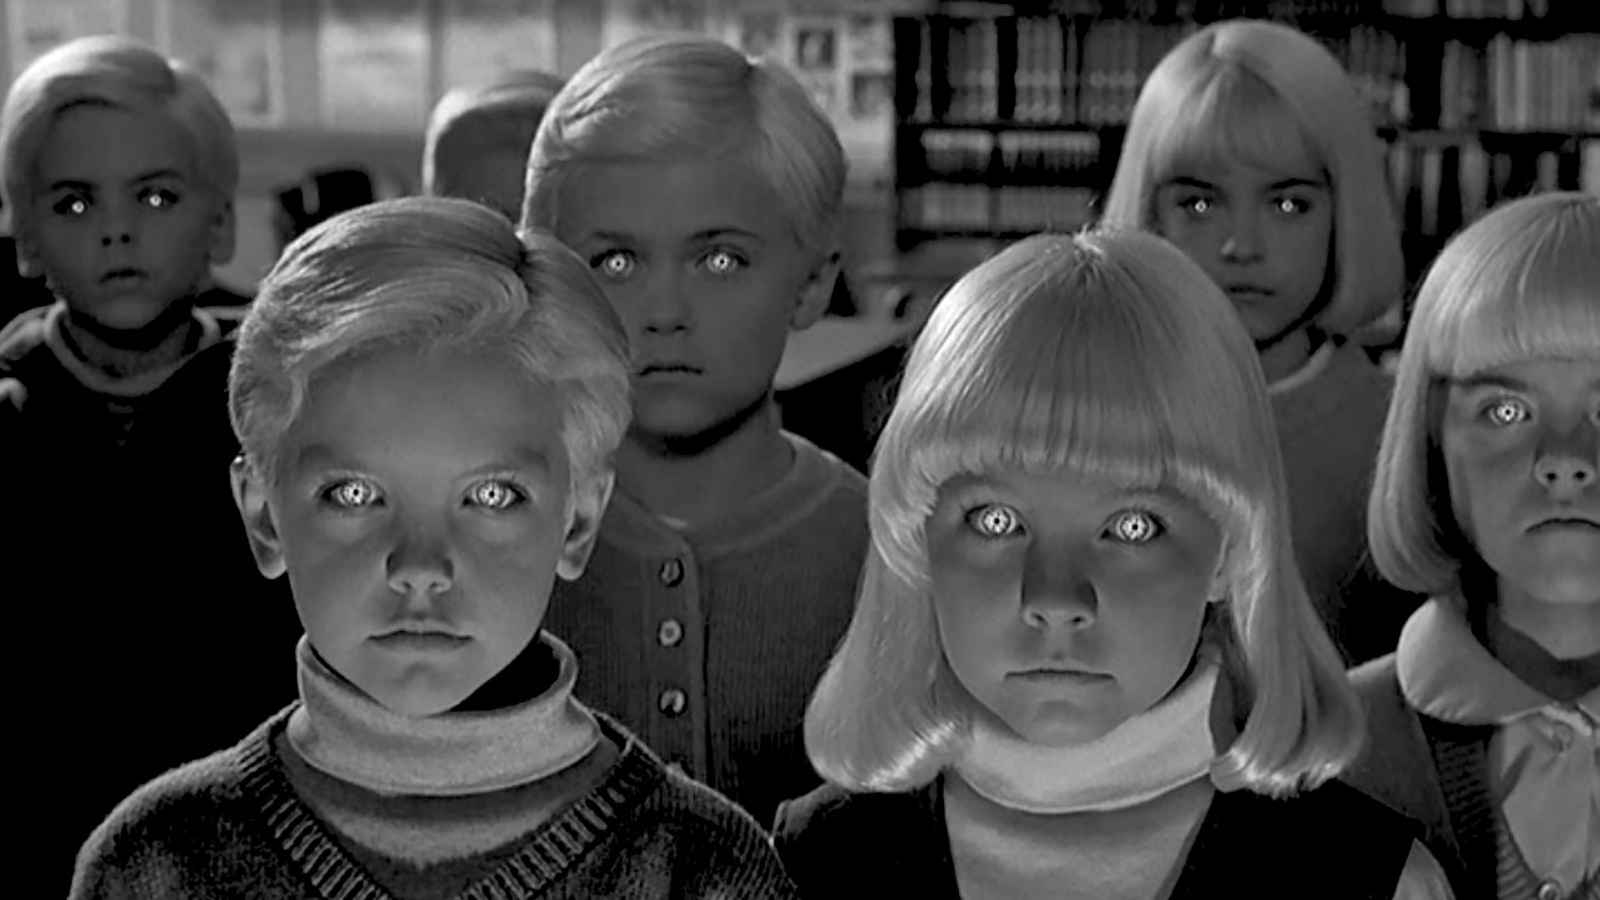 HalloweenRex 2: Village of the Damned (1960)